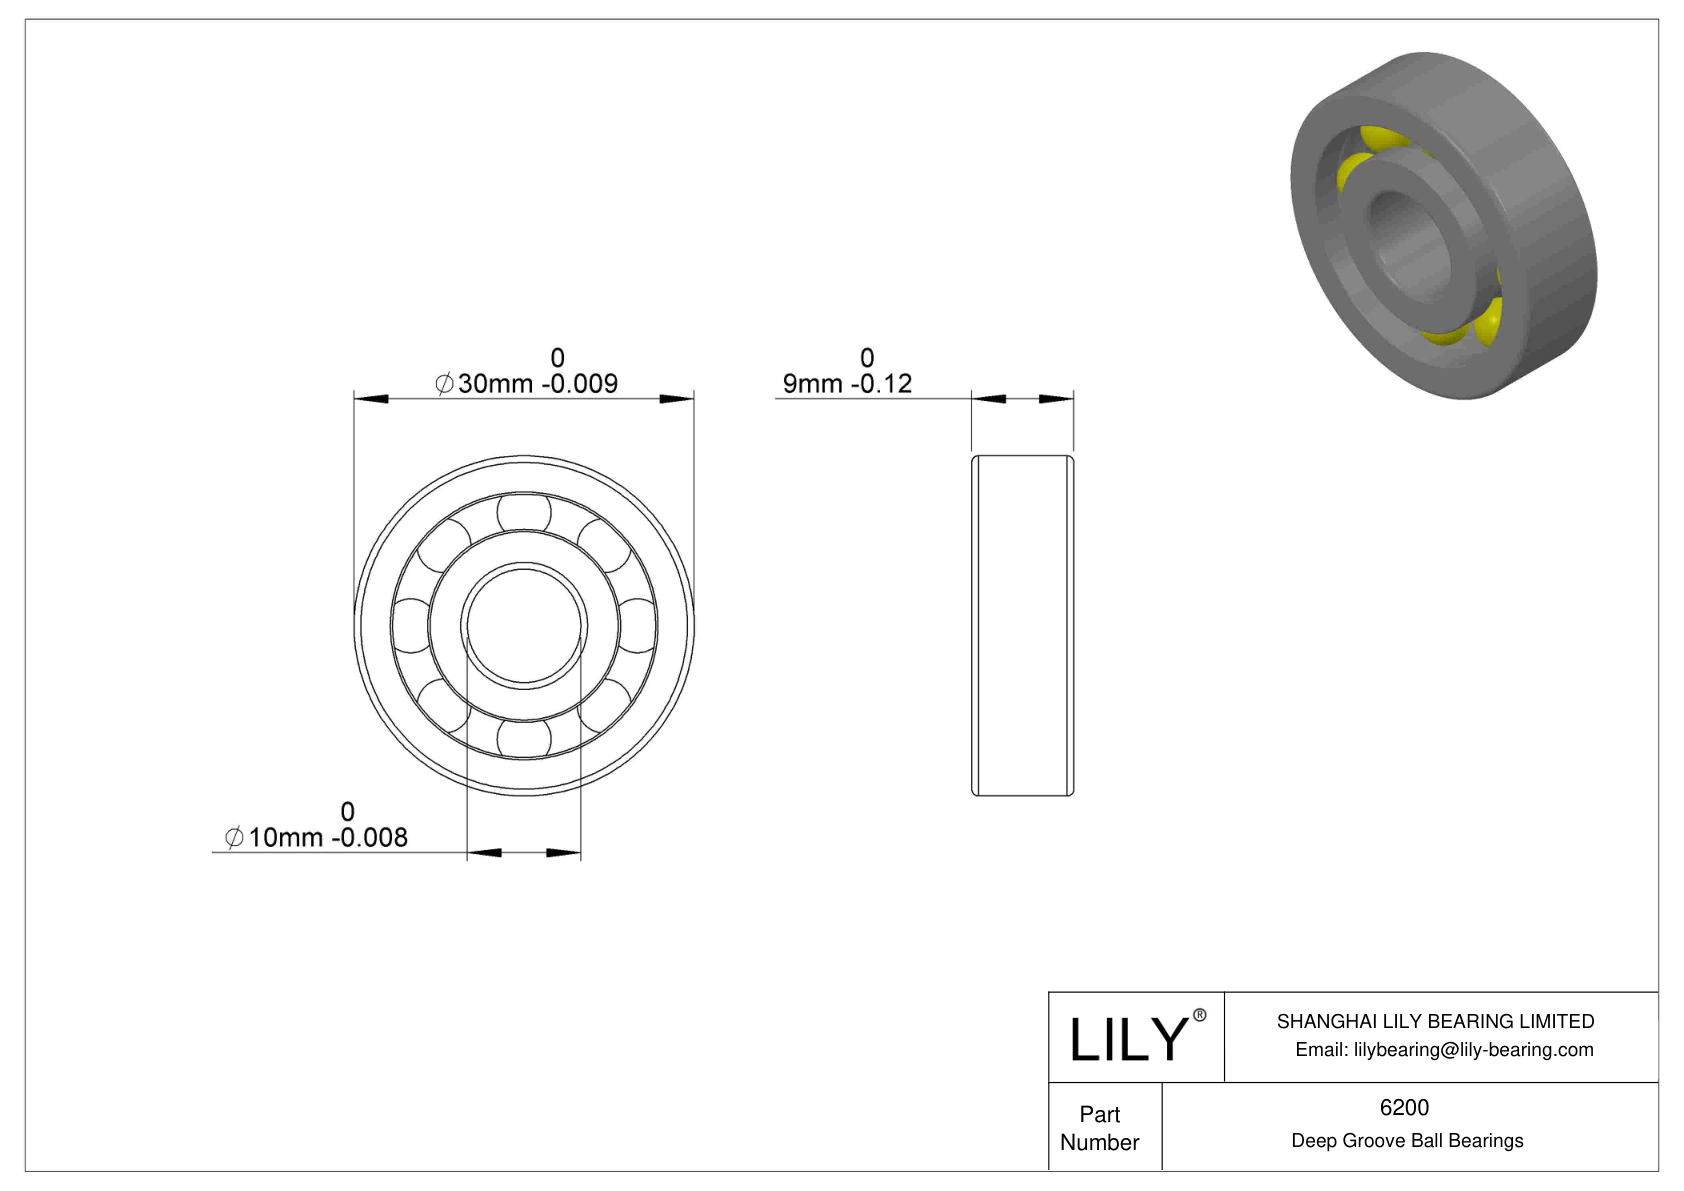 LILY-PU620060-12 Polyurethane Coated Bearing cad drawing